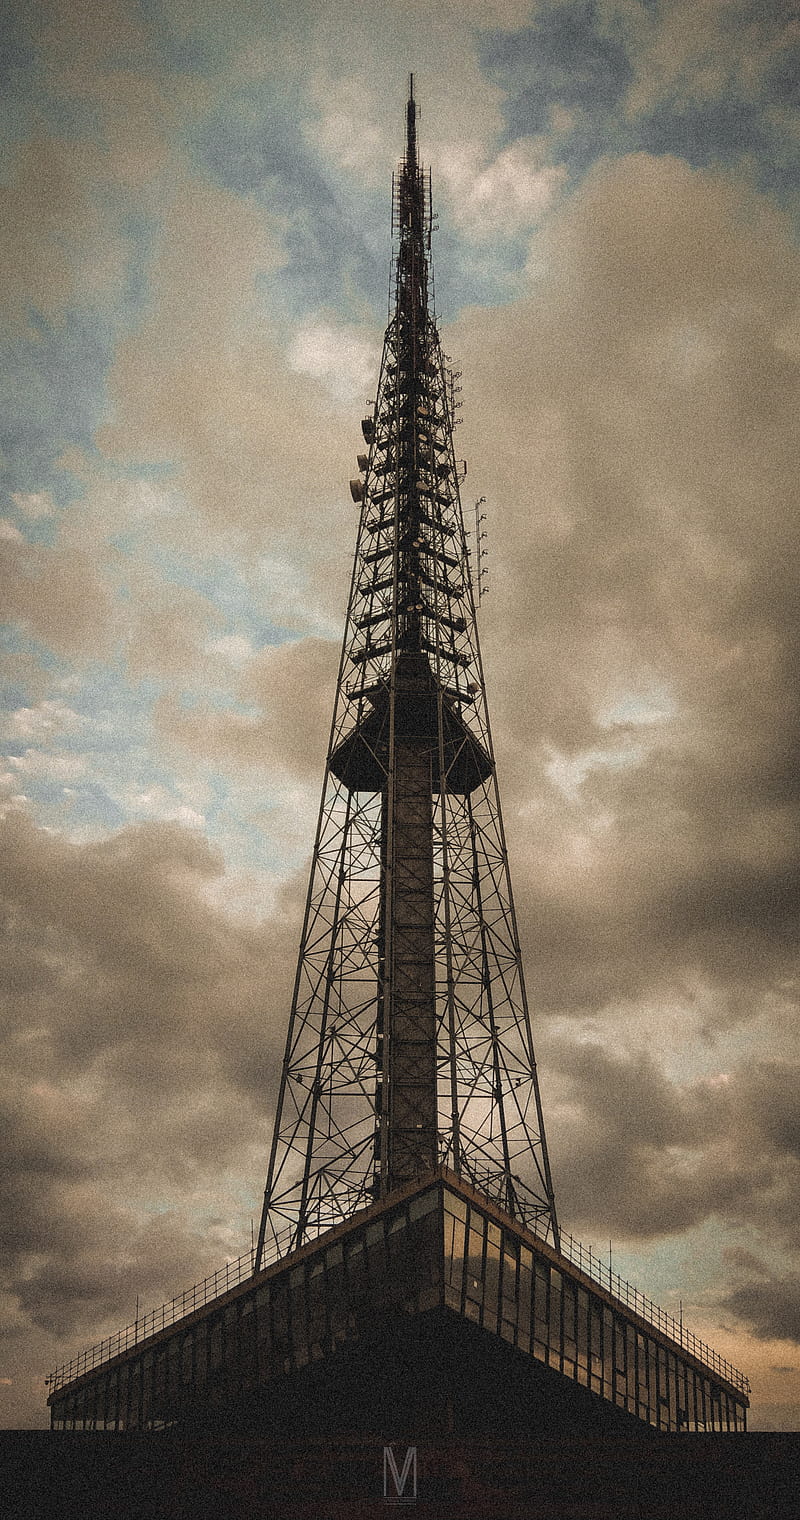 The tower is high. Tashkent TV Tower.